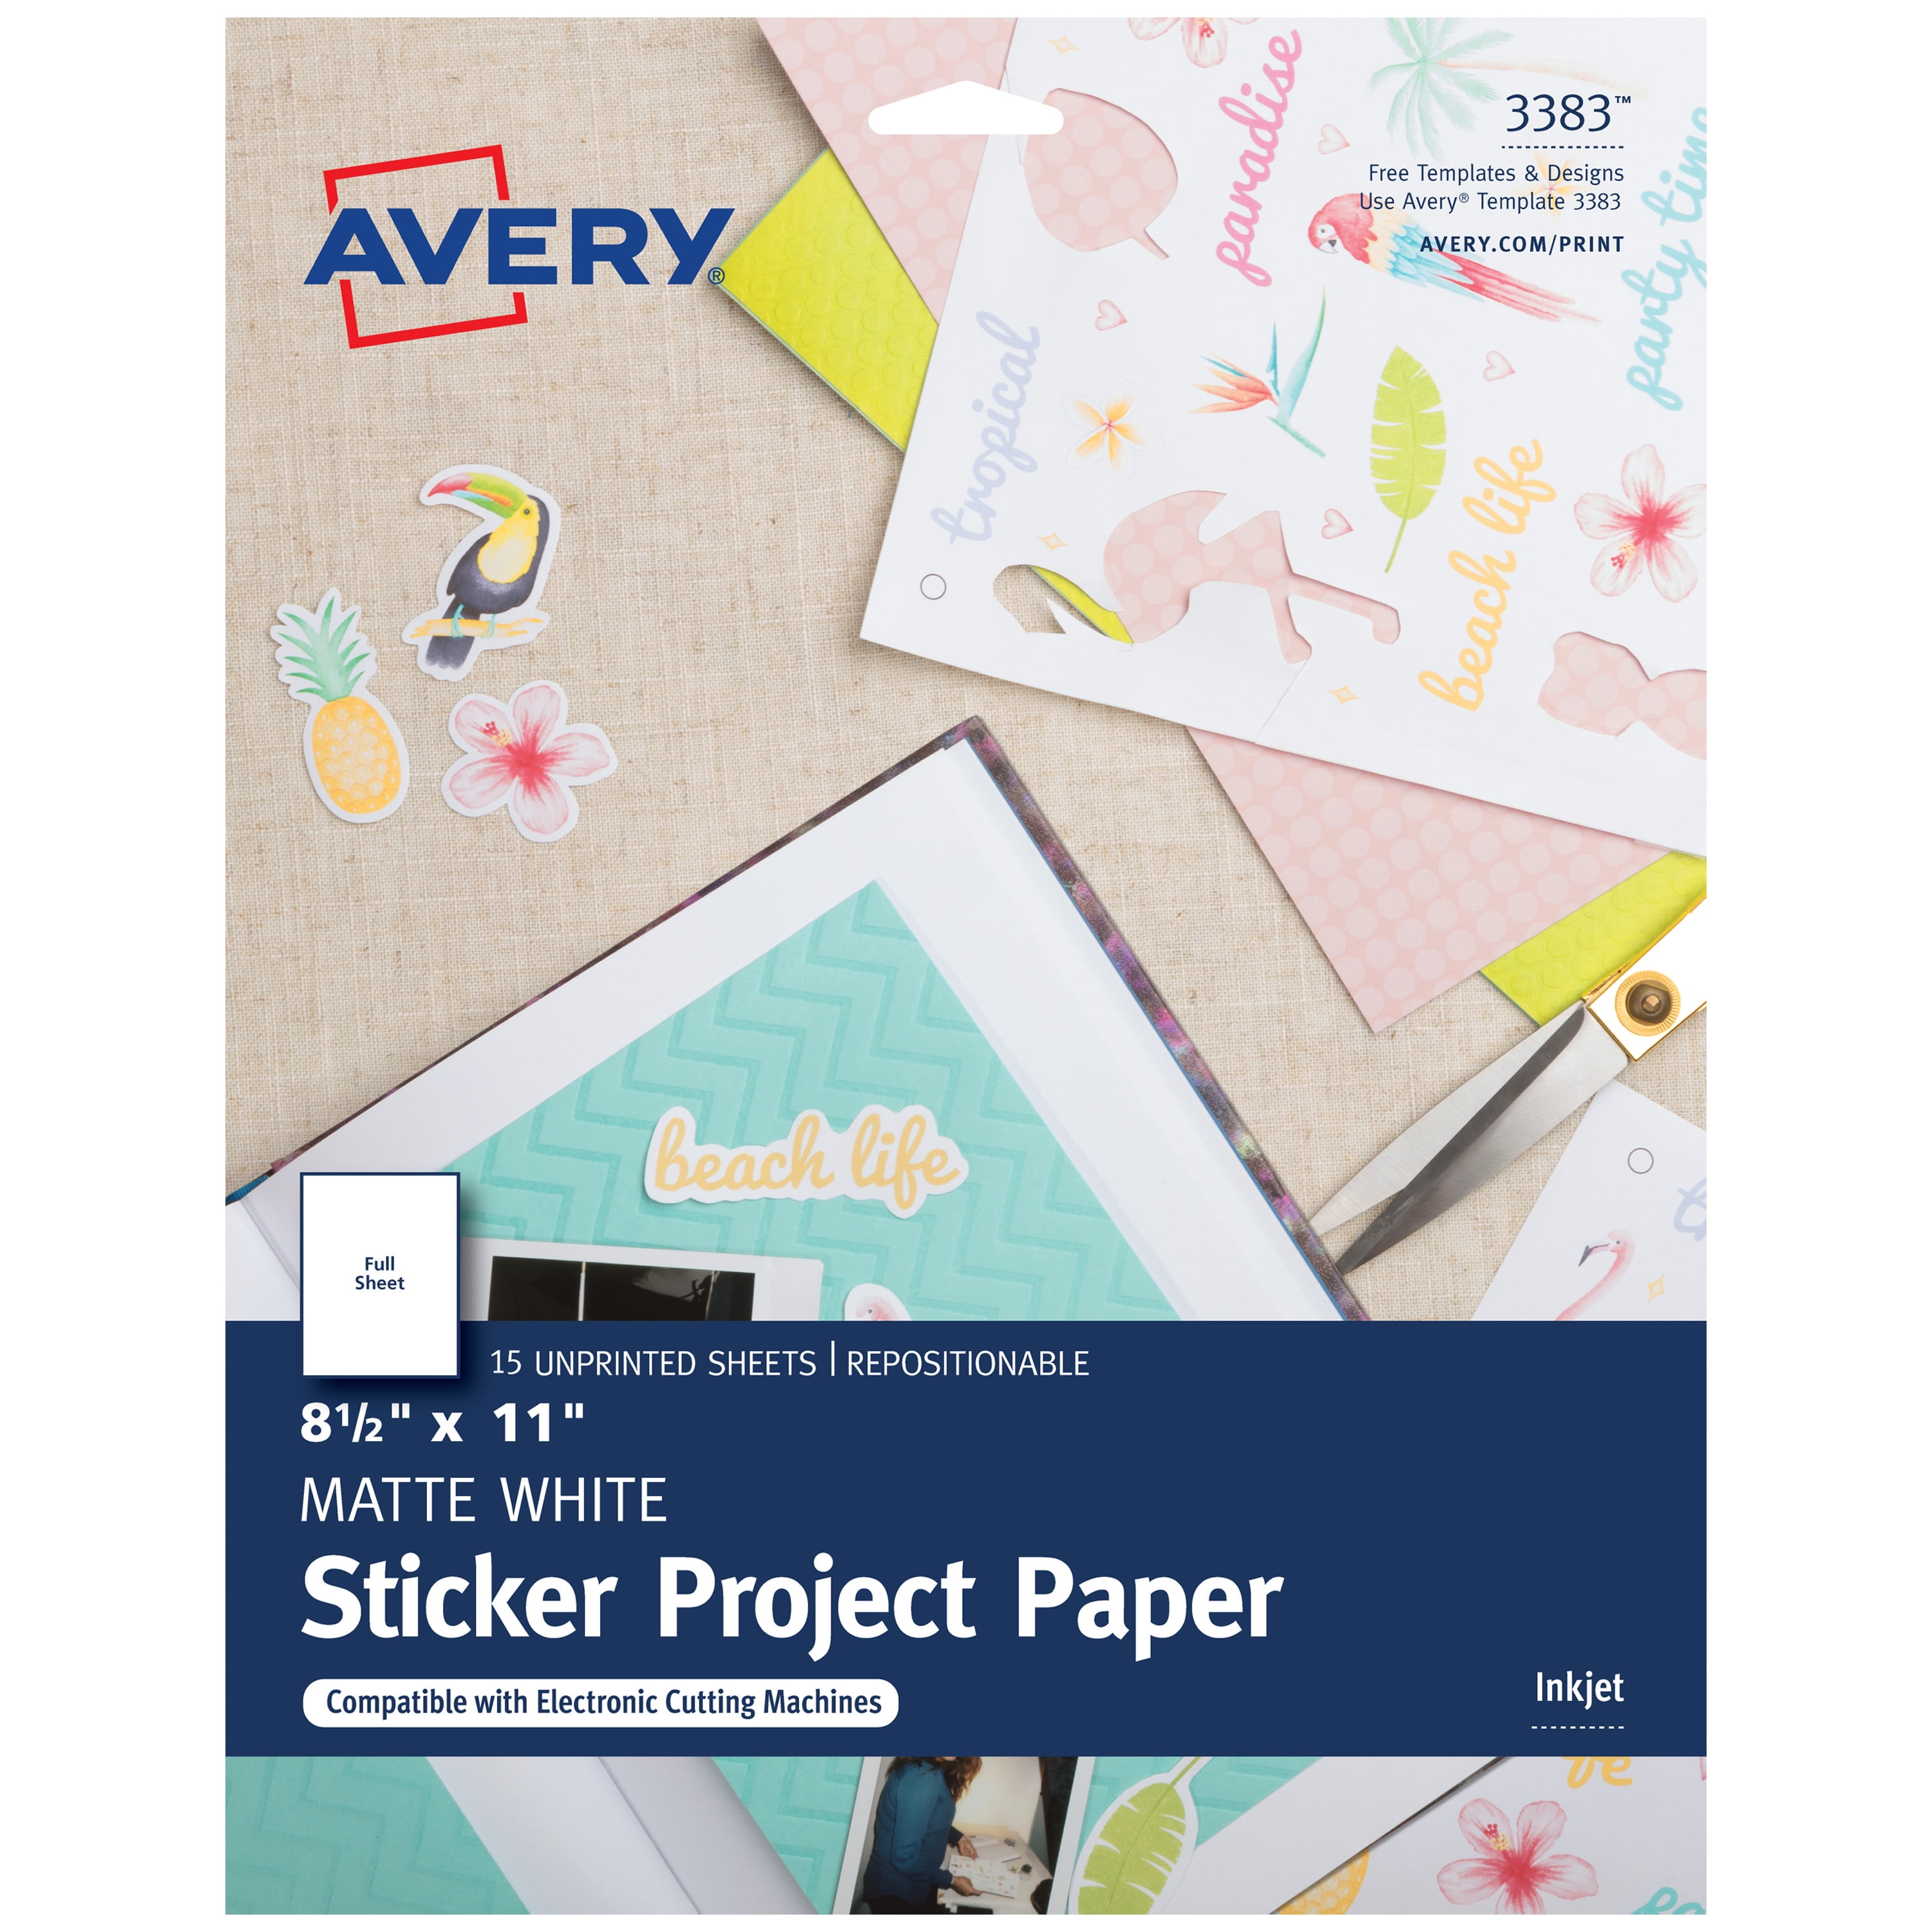  Enjoy Myself Self Adheive Cork Sheets Sticker Paper